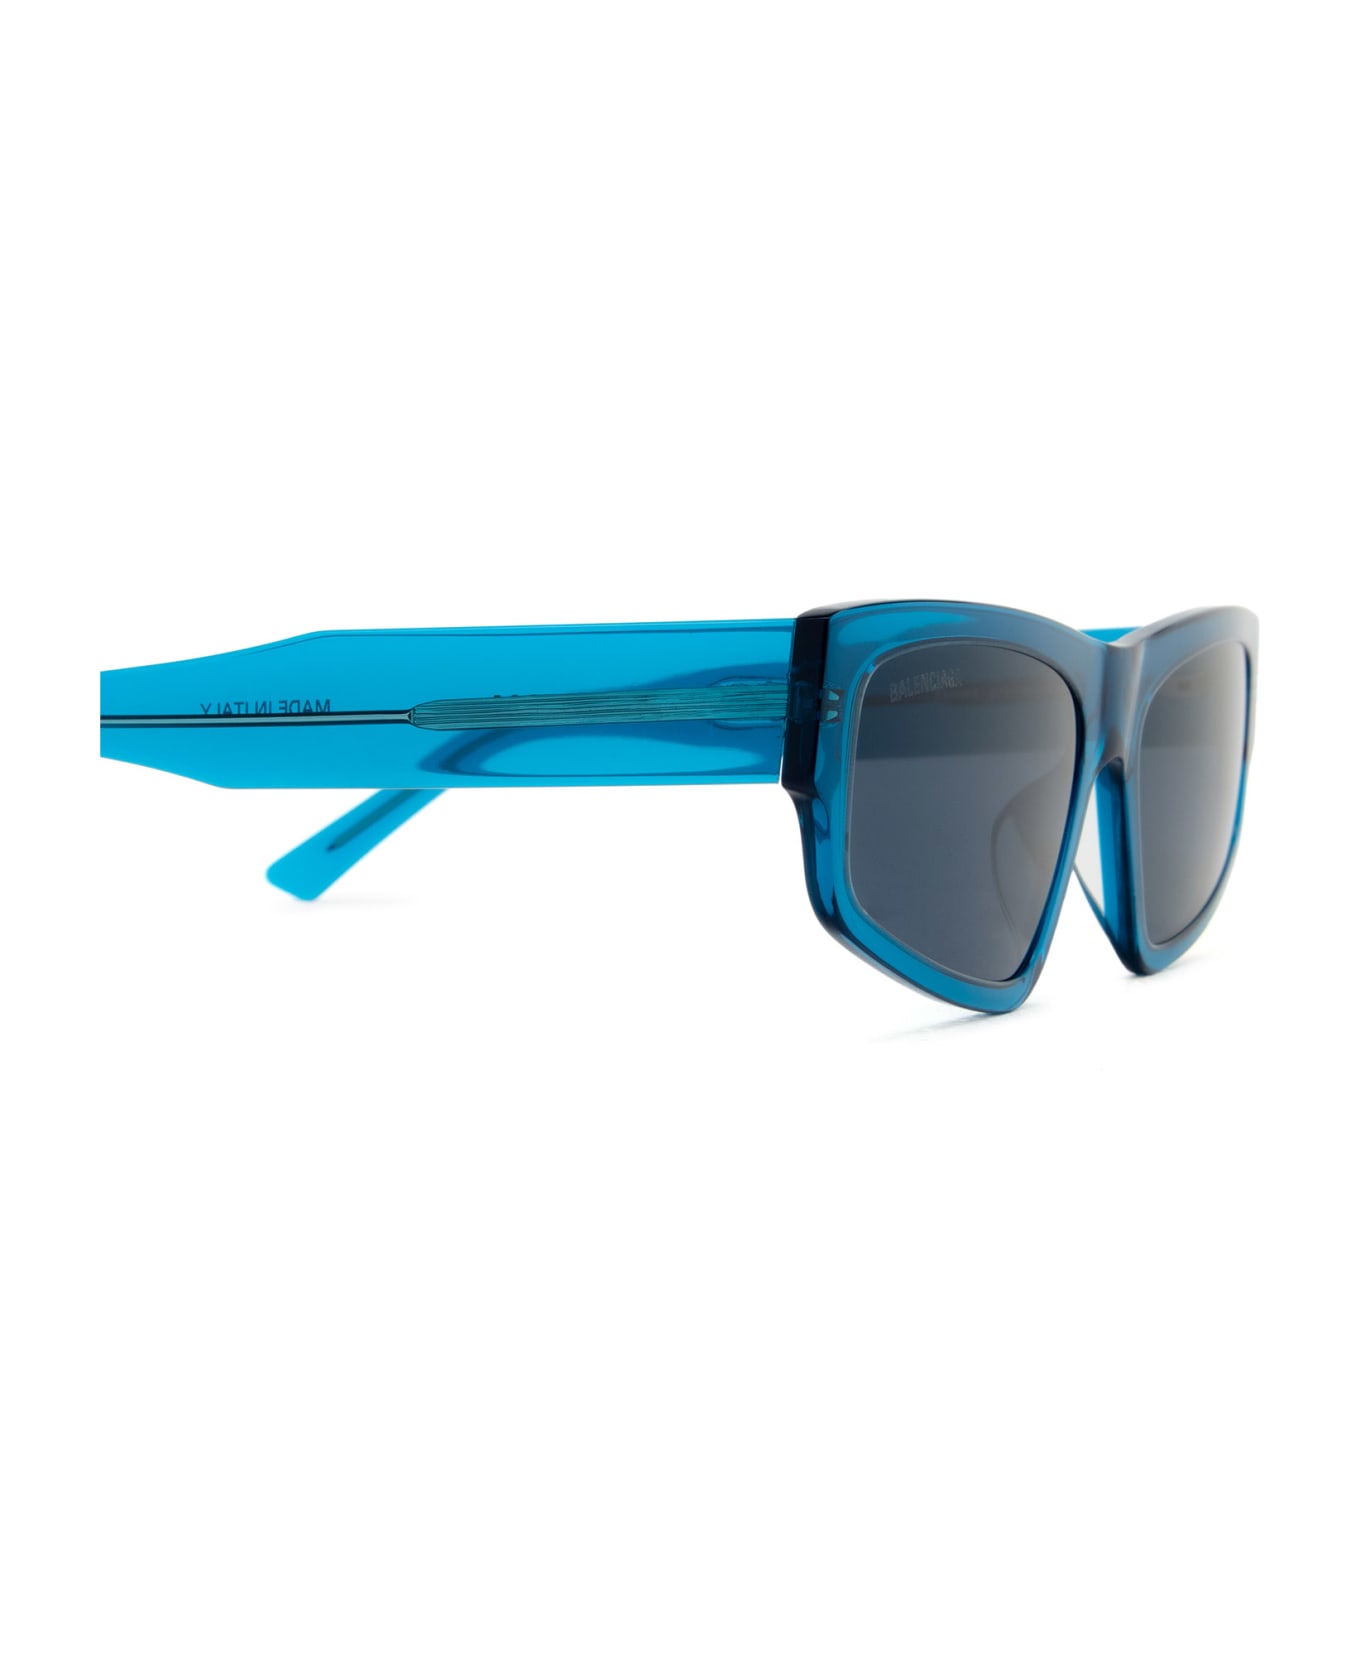 Balenciaga Eyewear Bb0305s 004 Sunglasses - fuchsia